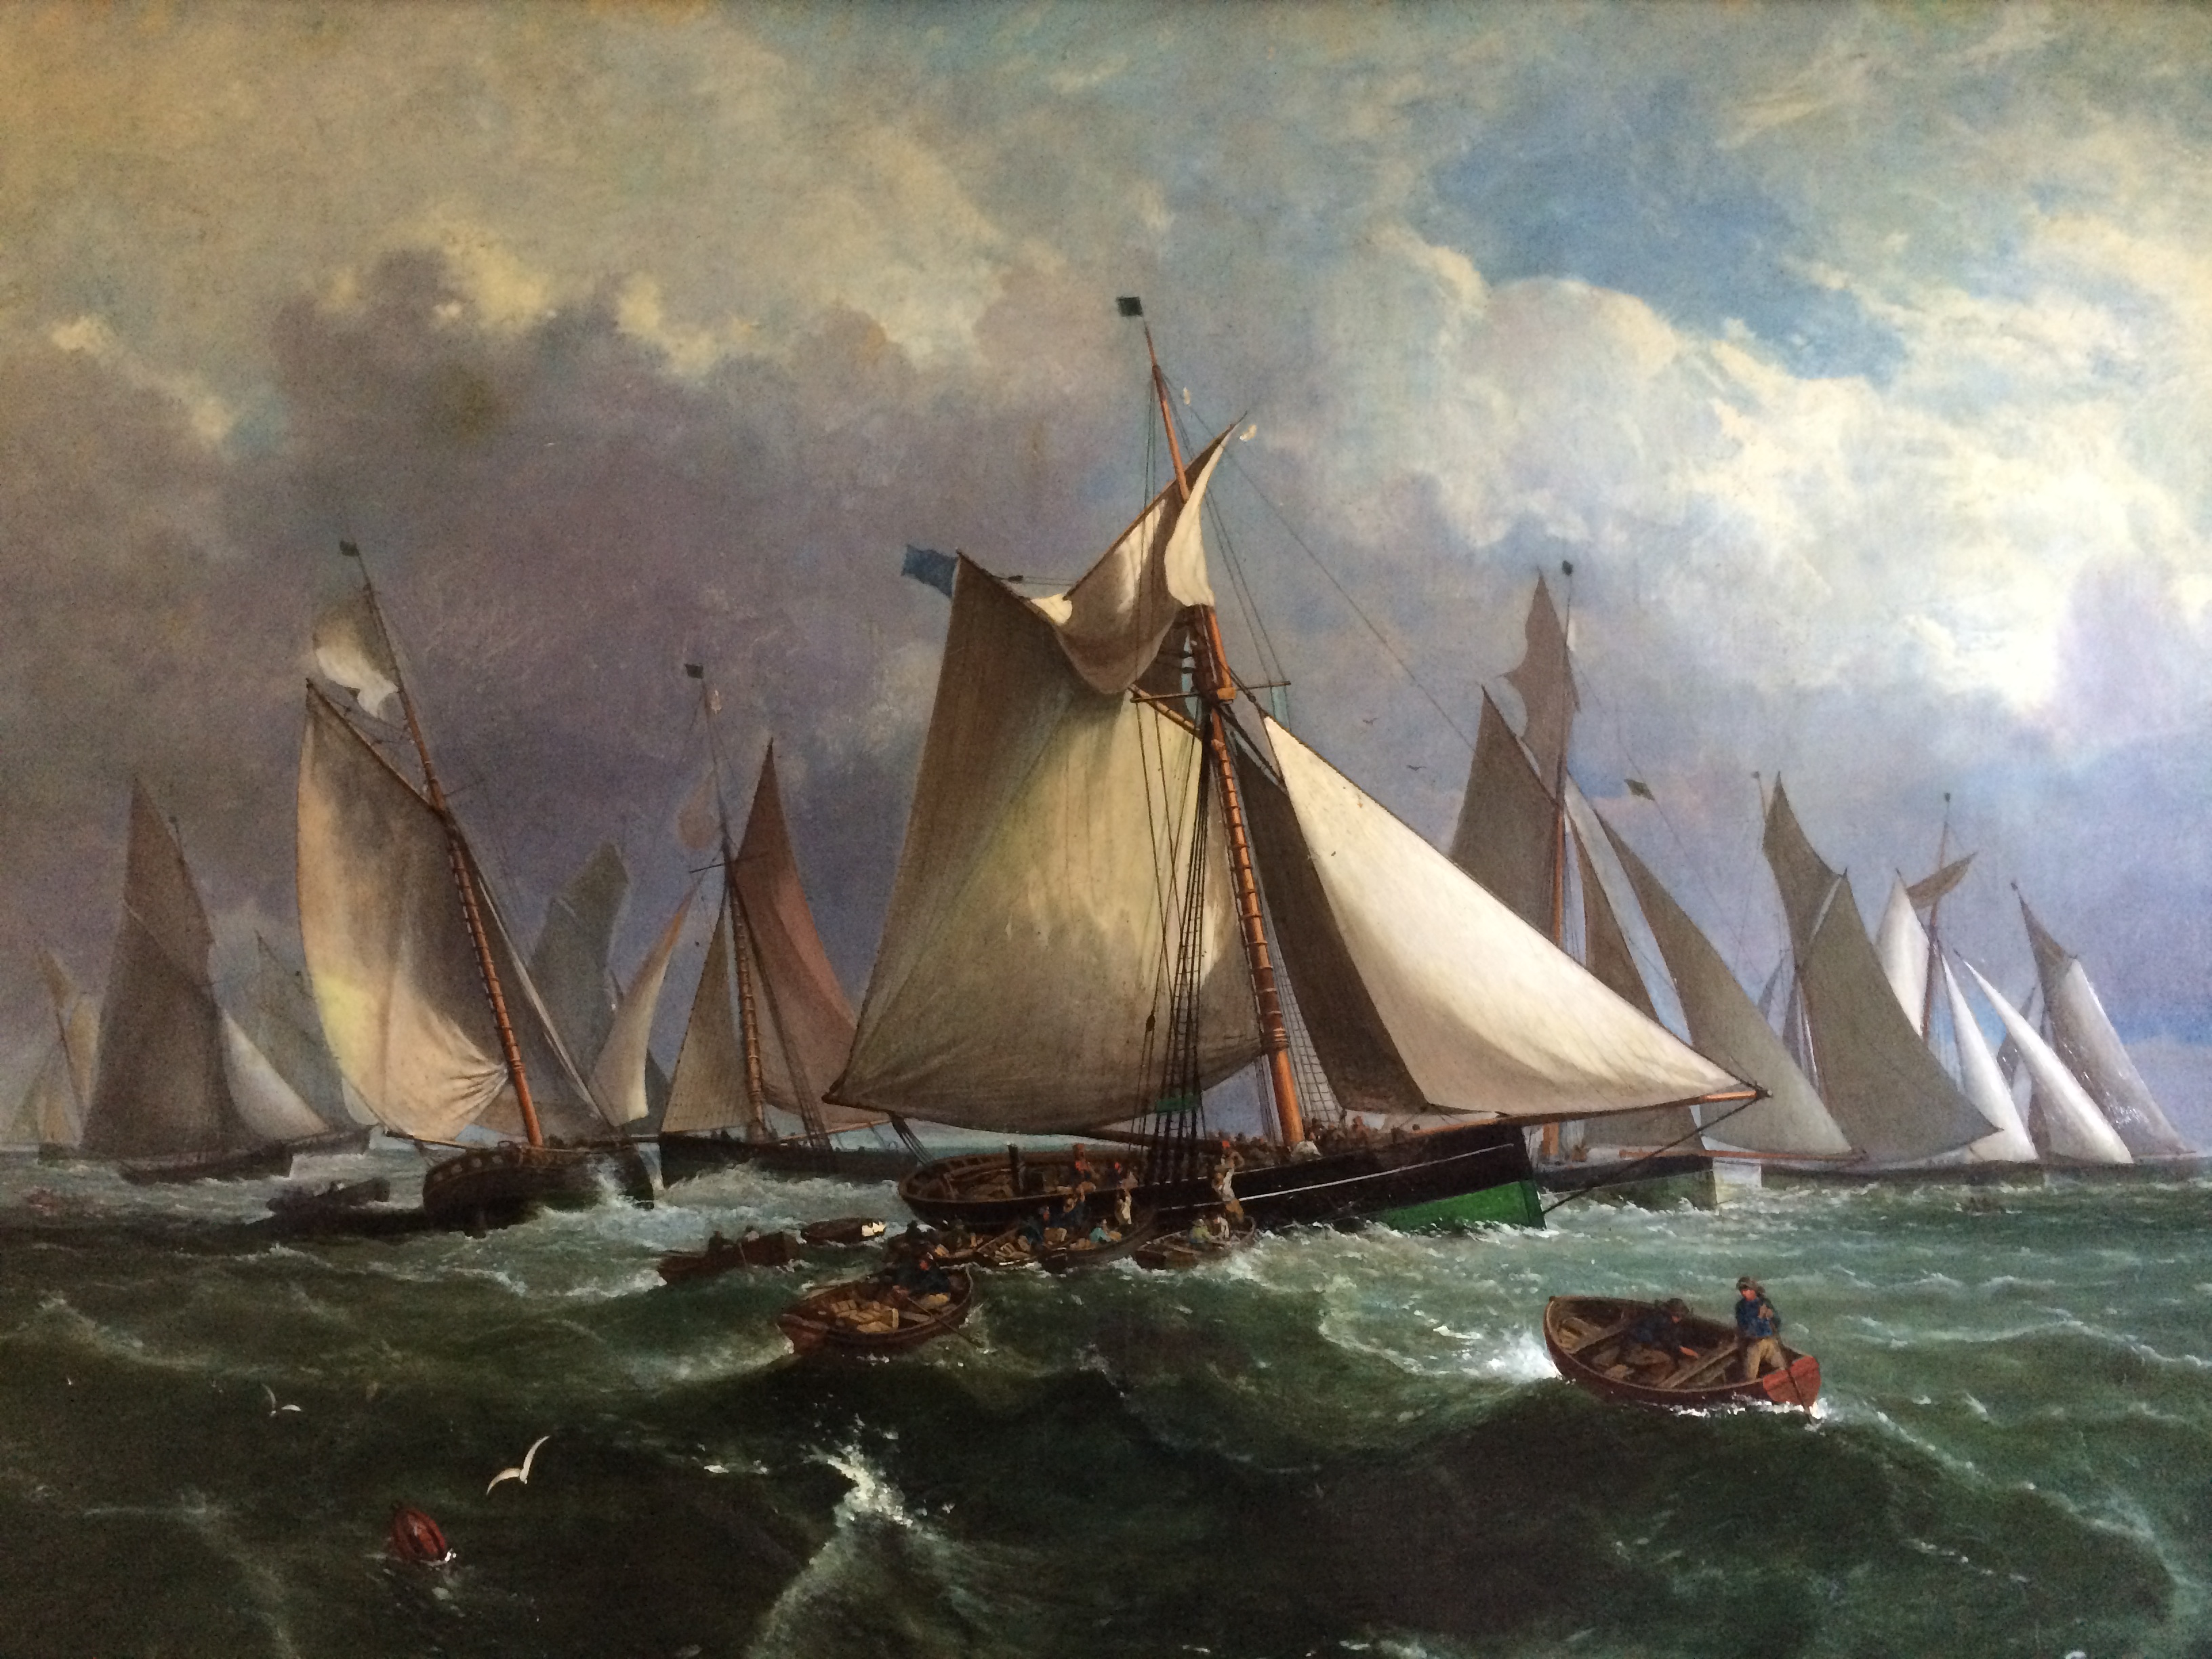 Painting of the Short Blue Fleet